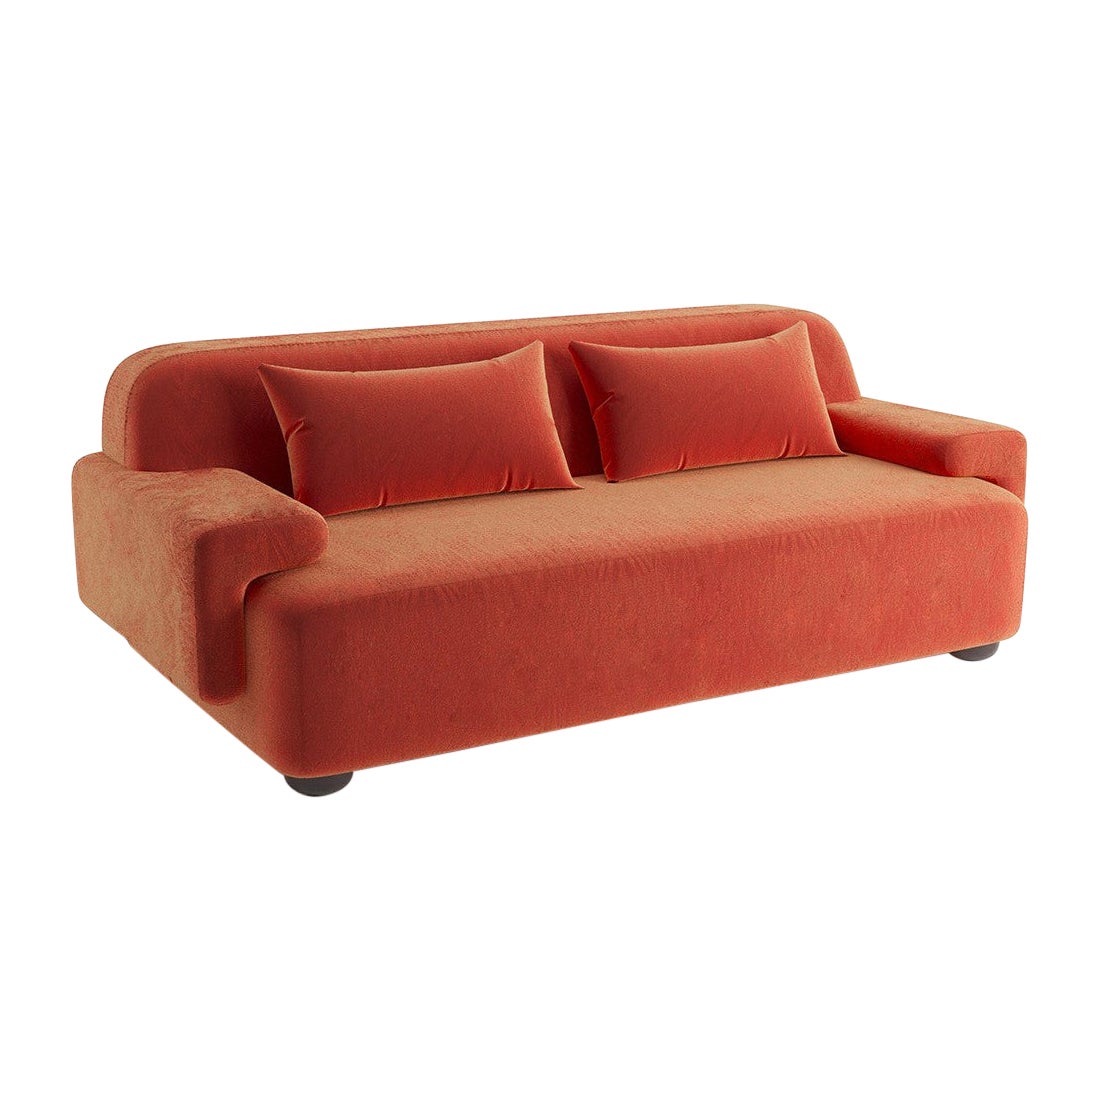 Popus Editions Lena 3 Seater Sofa in Orange Verone Velvet Upholstery